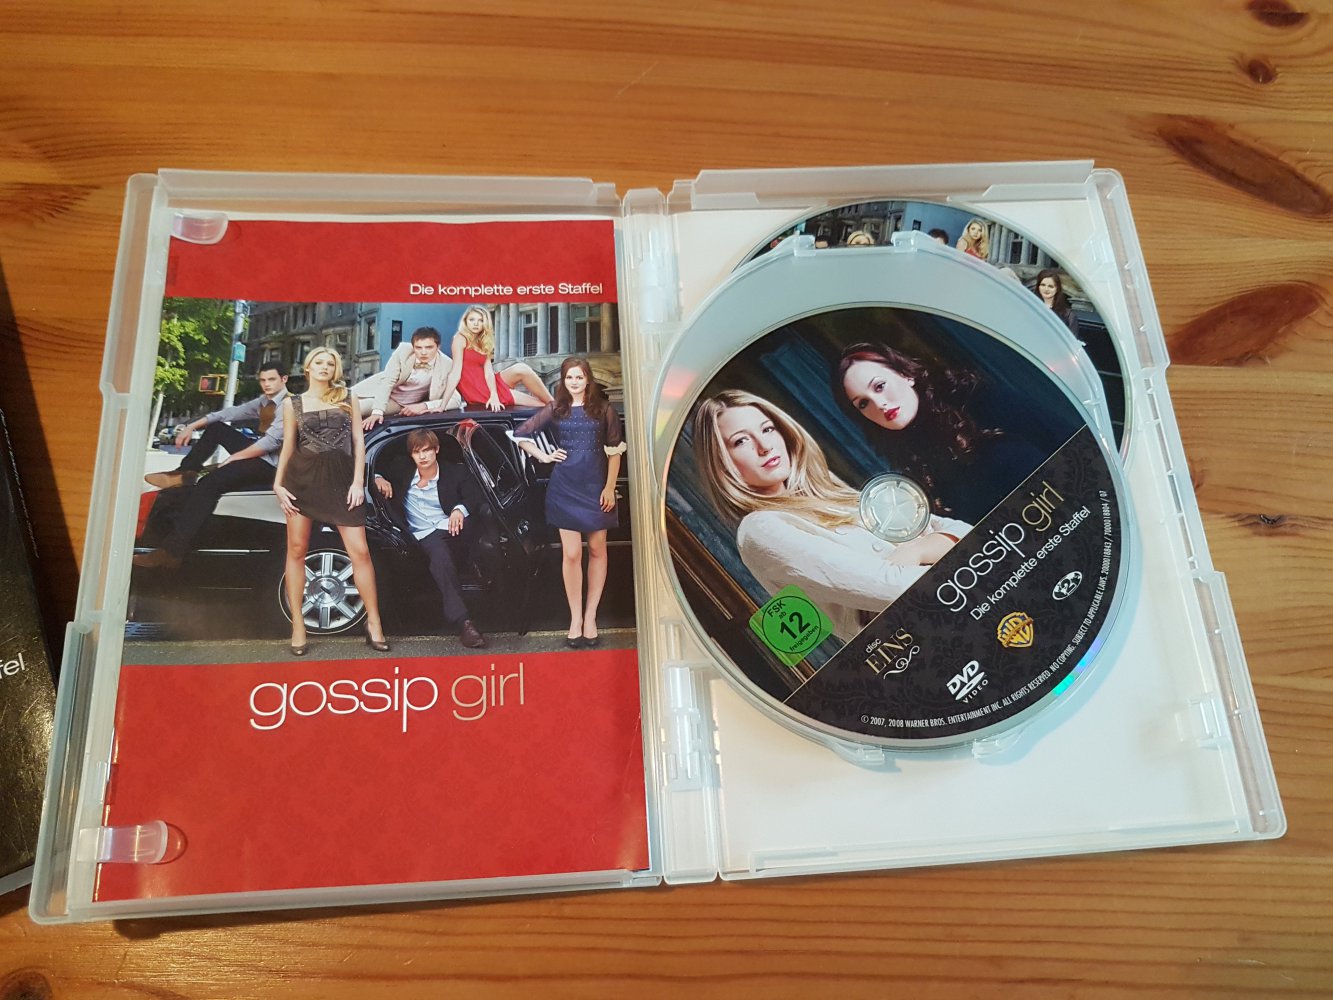 DVD Gossip girl, komplette erste Staffel